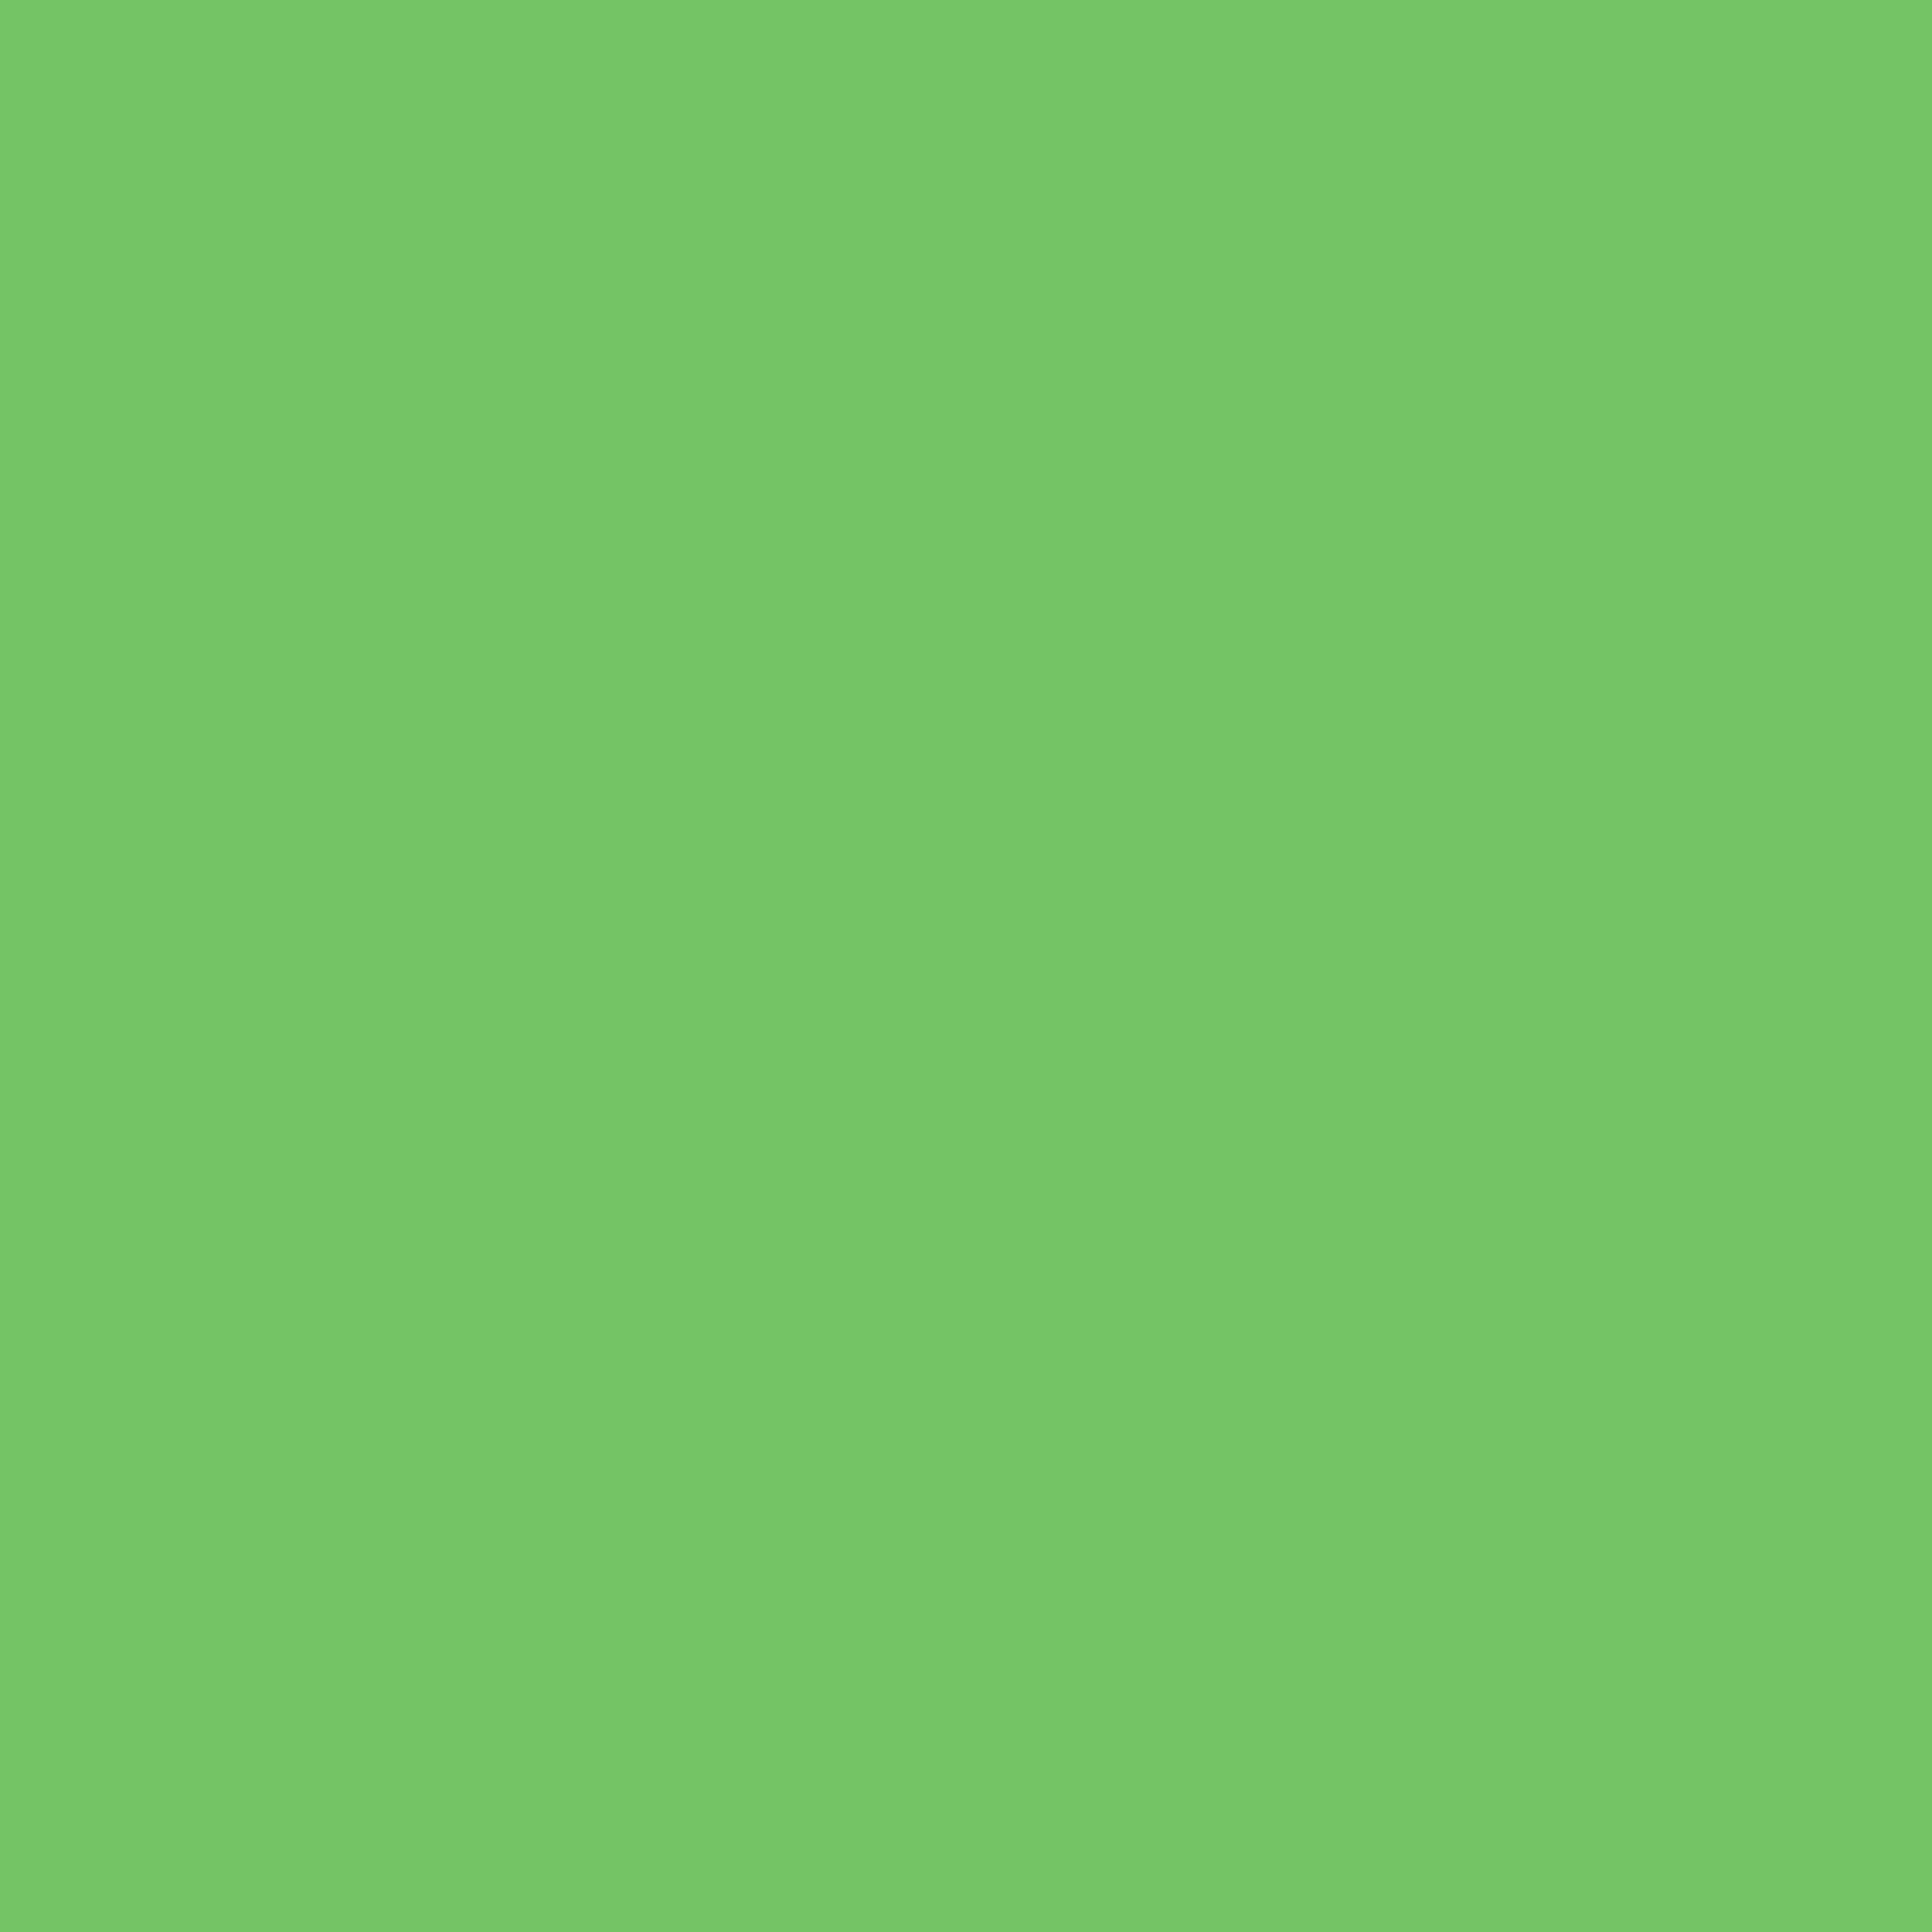 2732x2732 Mantis Solid Color Background